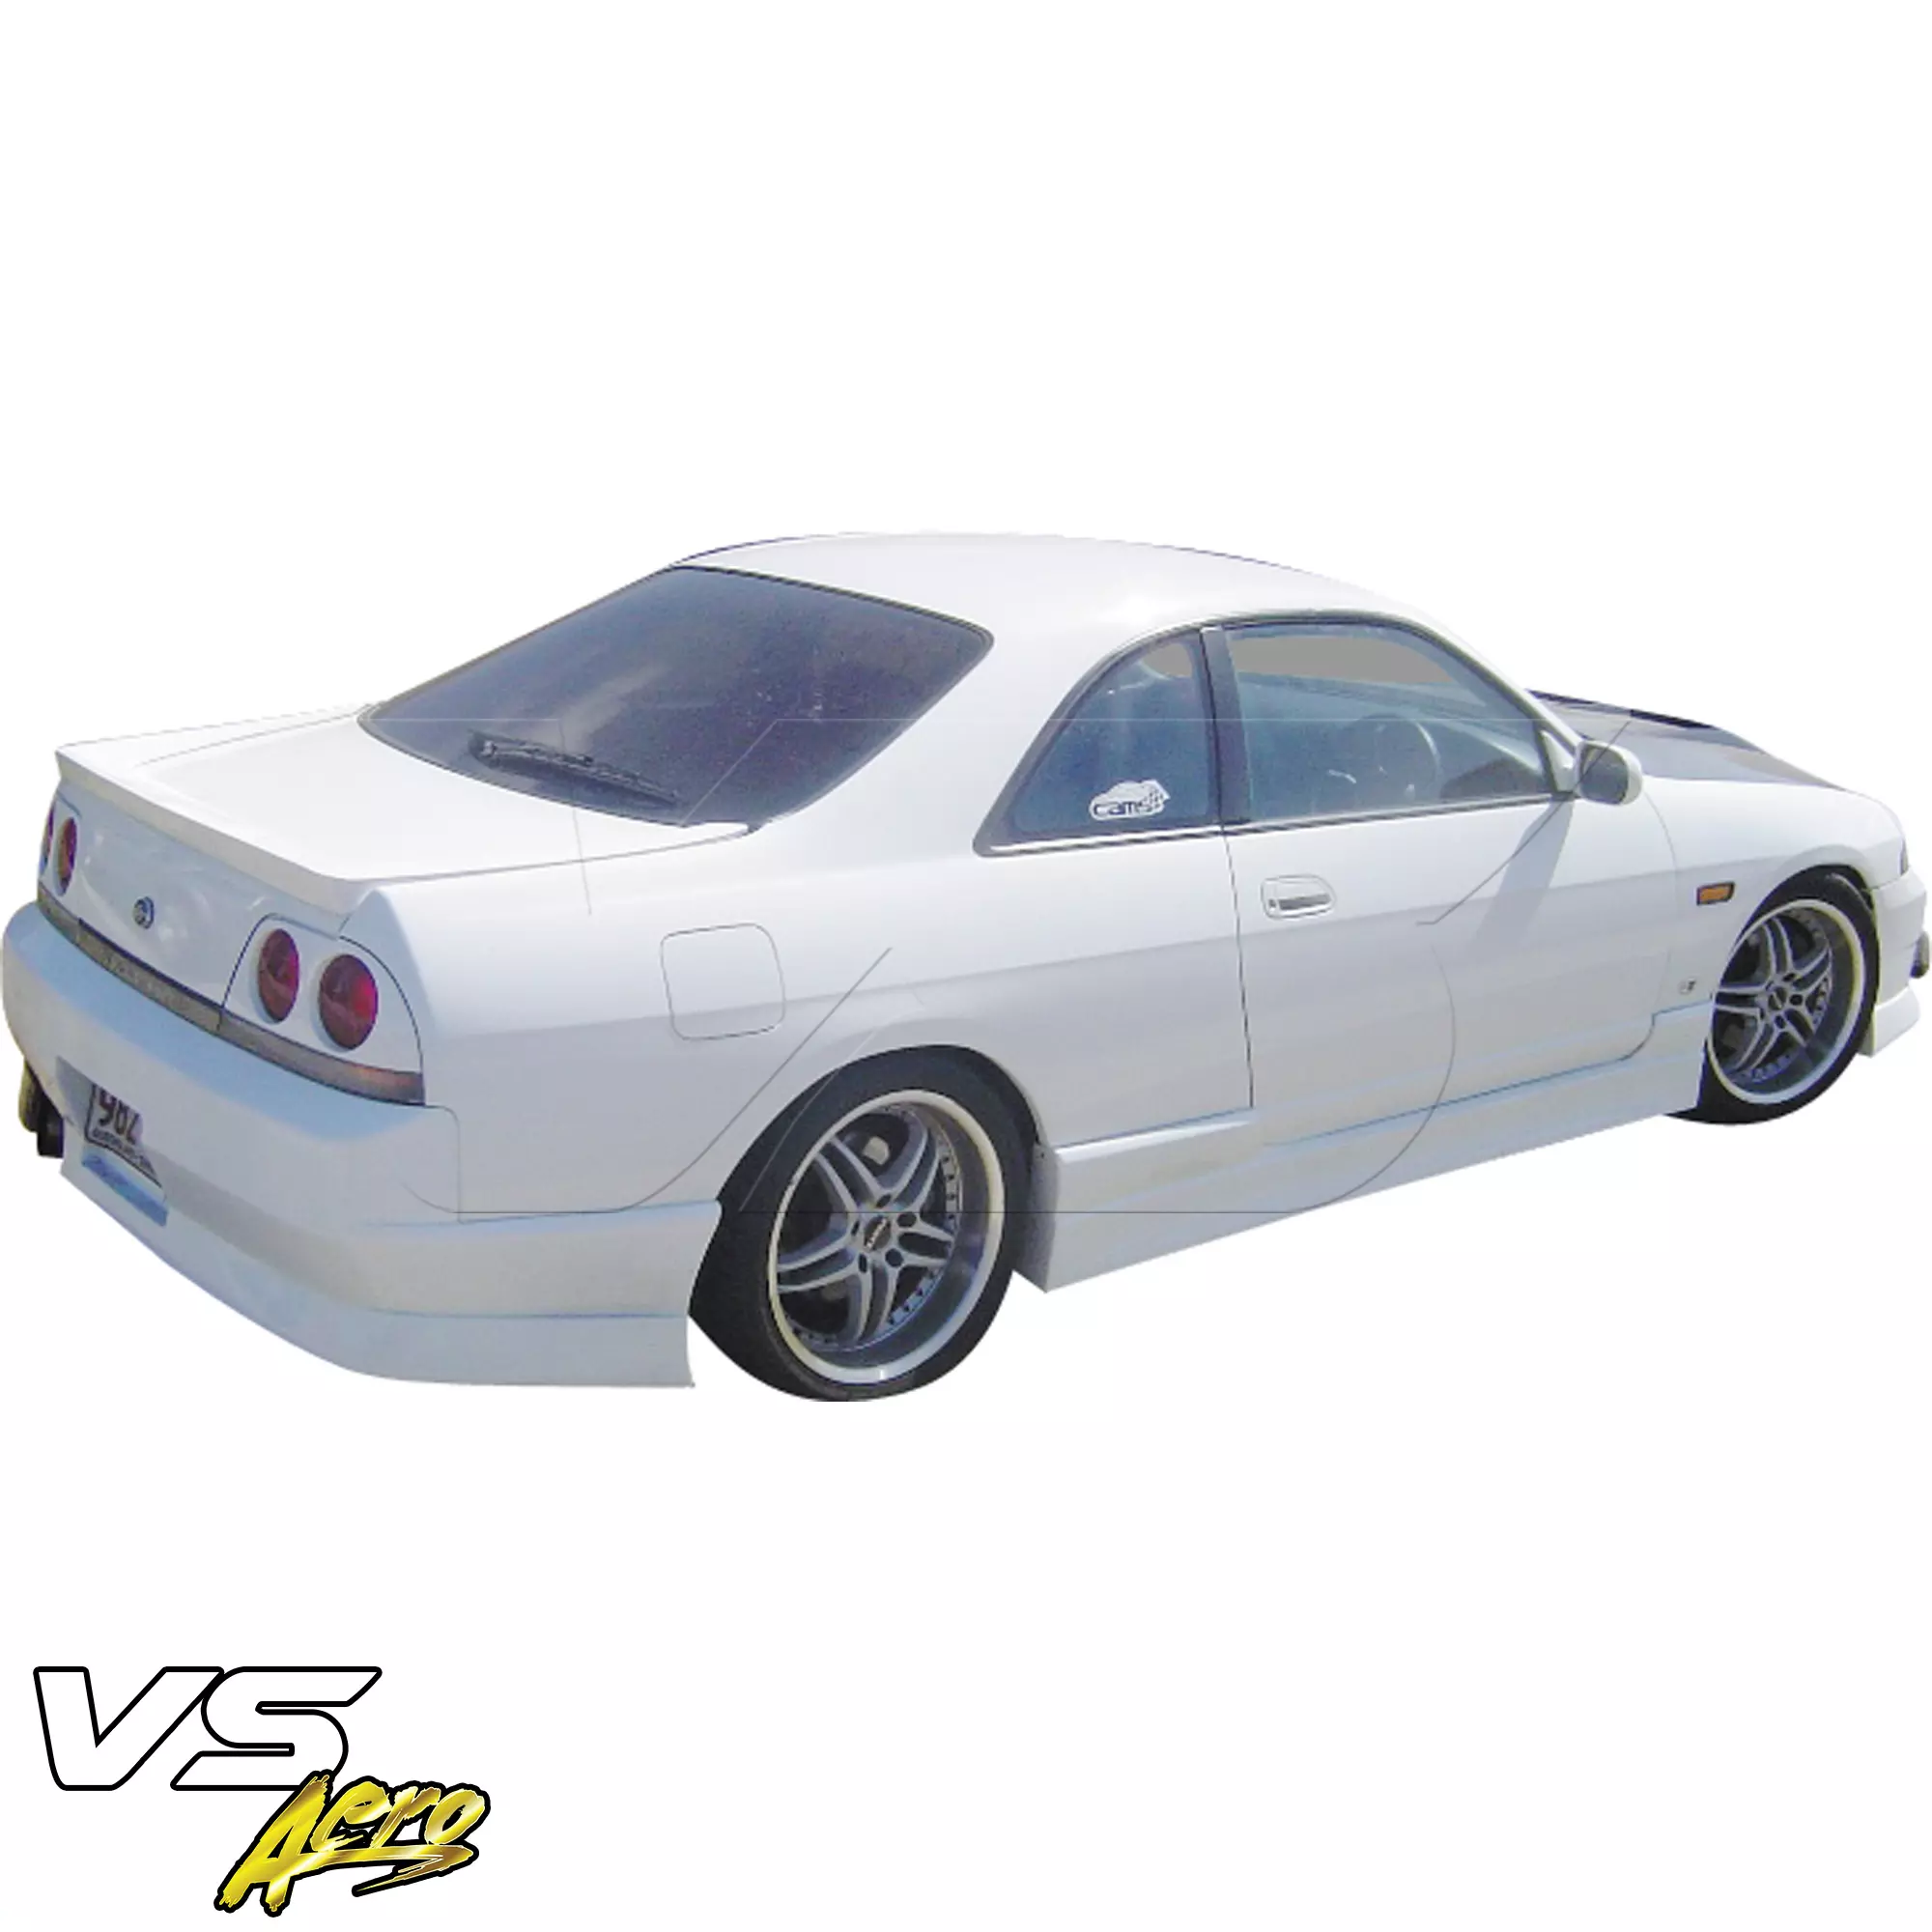 VSaero FRP MSPO Body Kit 4pc > Nissan Skyline R33 GTS 1995-1998 > 2dr Coupe - Image 27